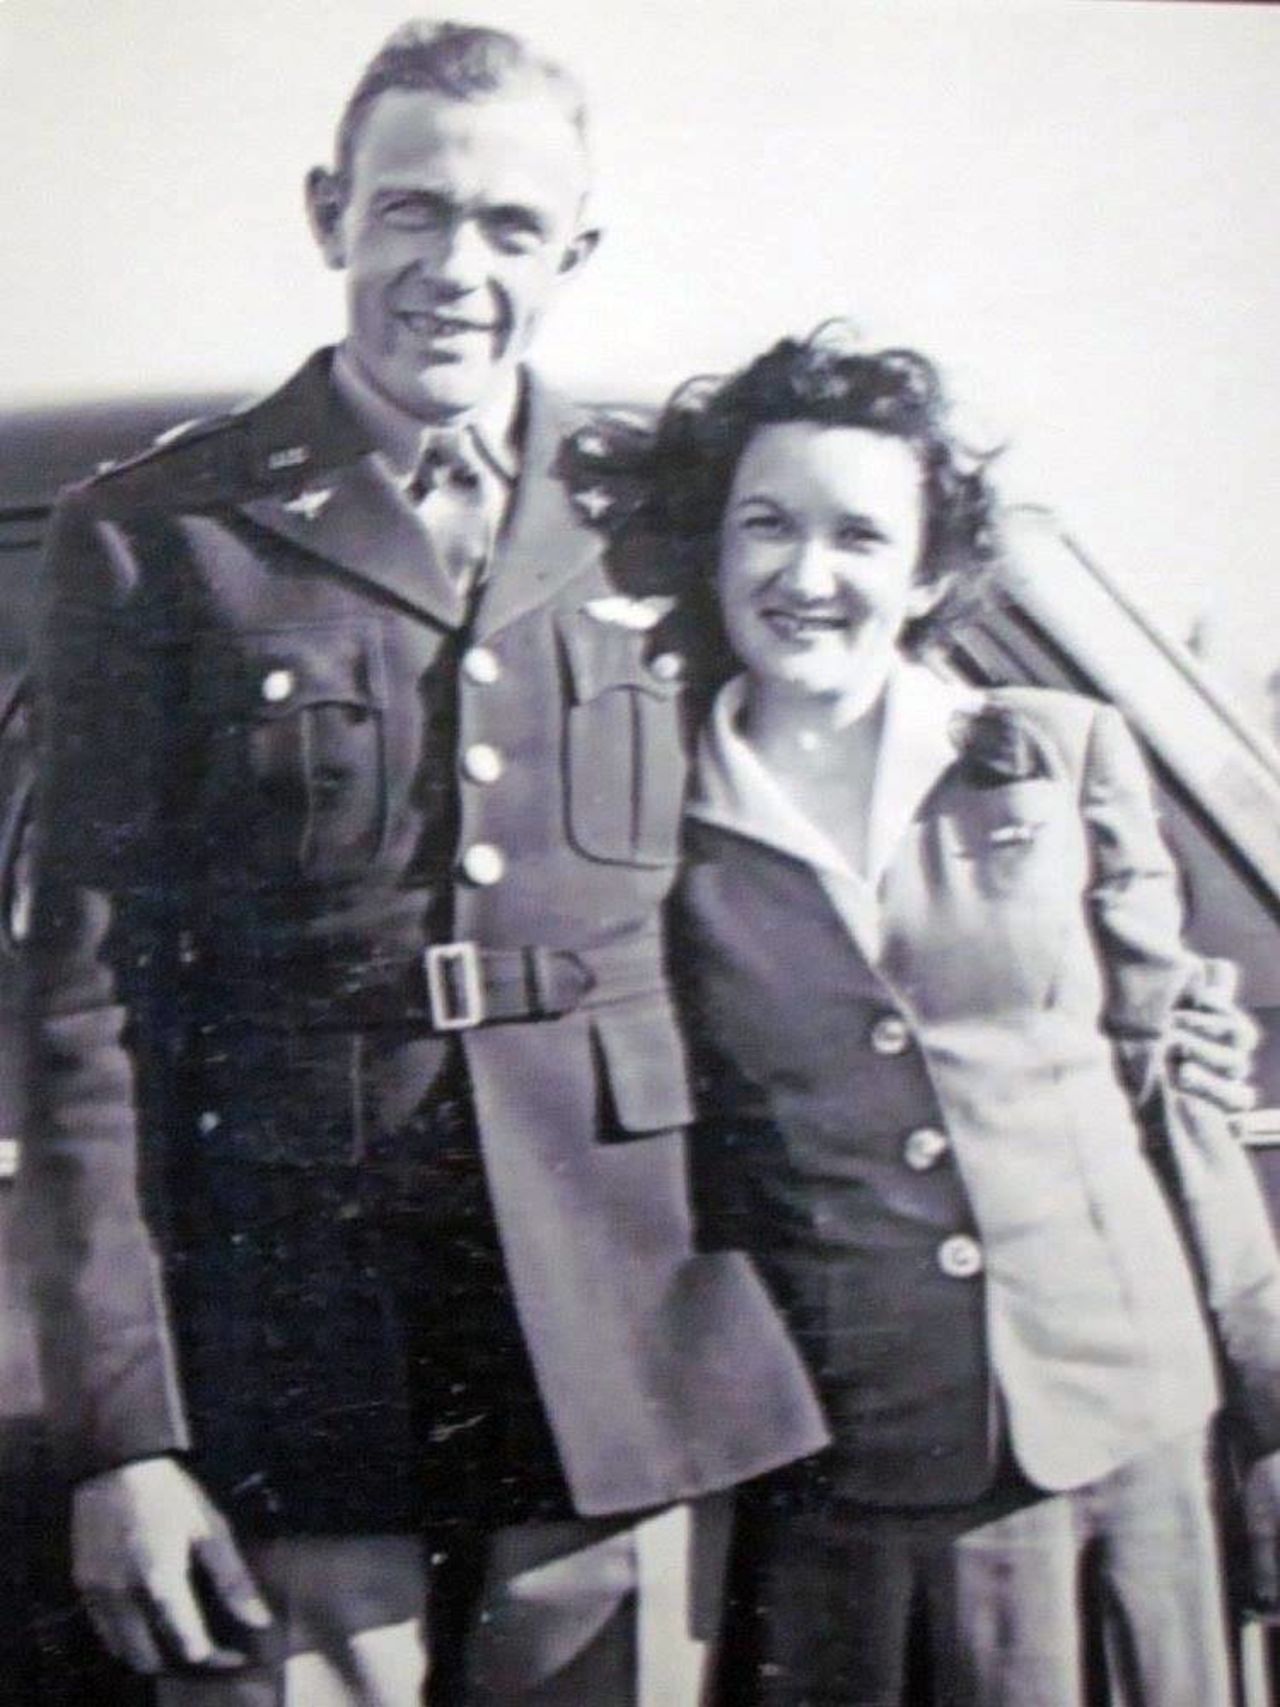 Richard Christenson con su esposa Ruth. (Cortesía de Marie Janiszewski)